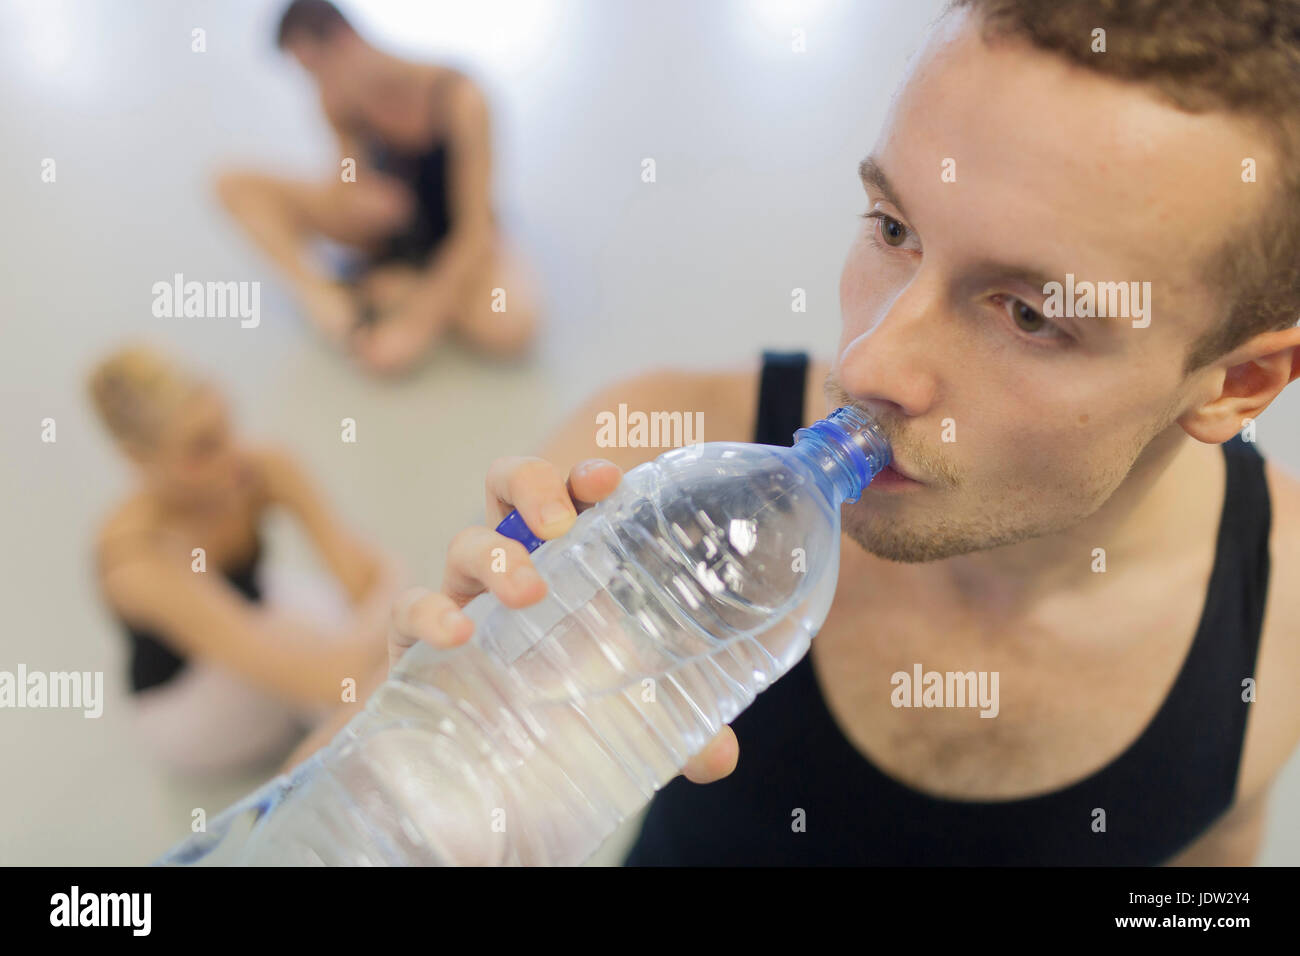 Dancer drinking water bottle in studio Stock Photo